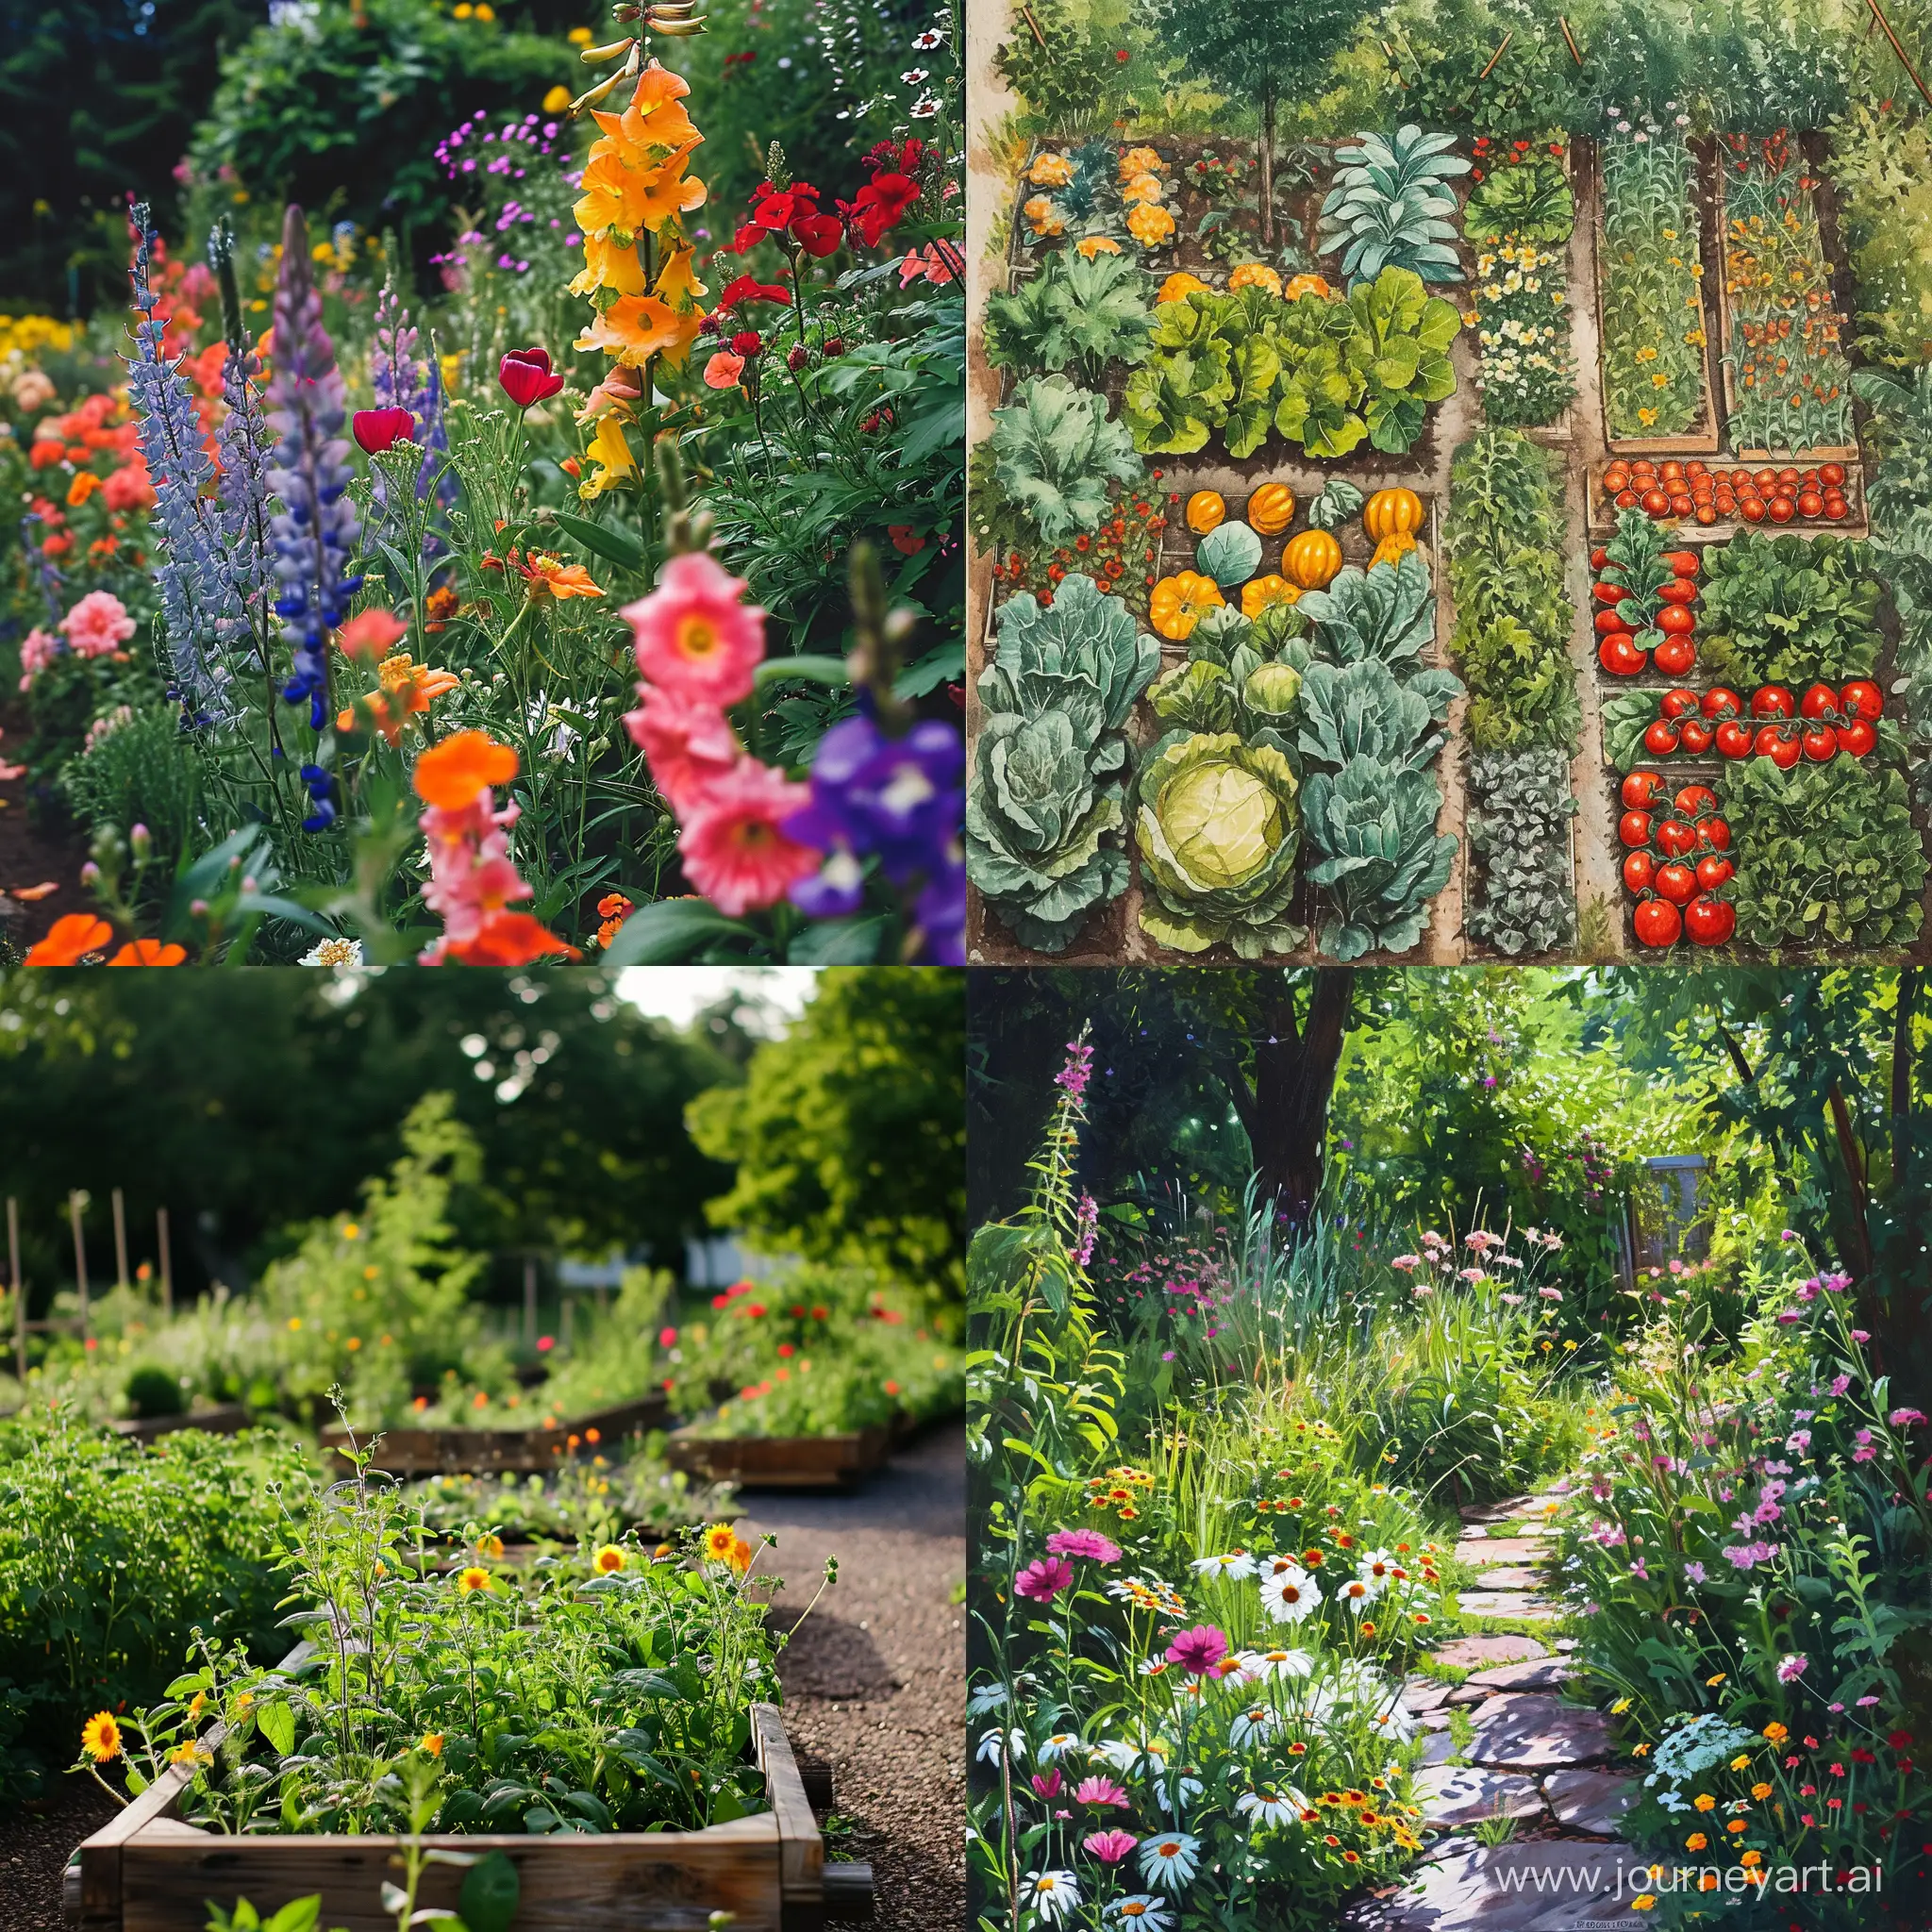 Vibrant-6th-Edition-Gardening-Catalog-Cover-Art-Explore-the-Beauty